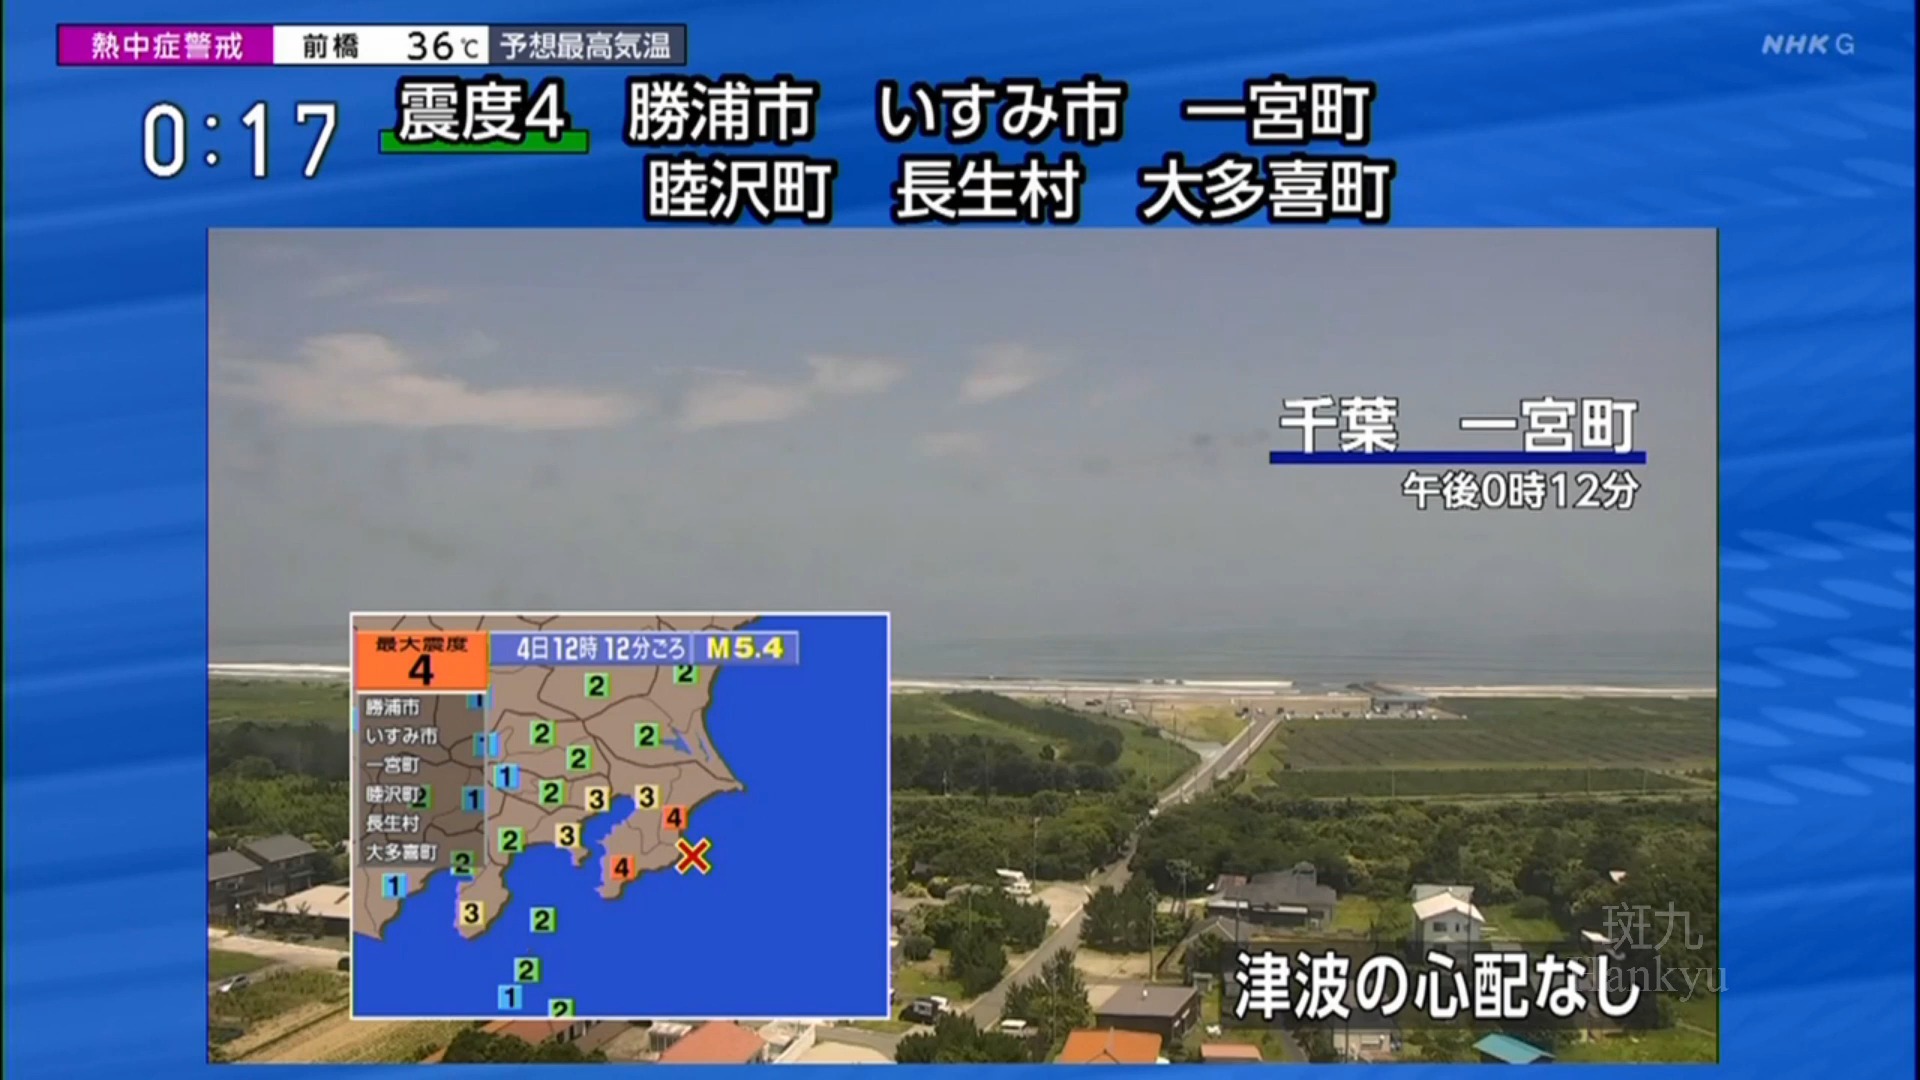 【NHK/地震速报】20240704 1212 千叶震度4，M5.4